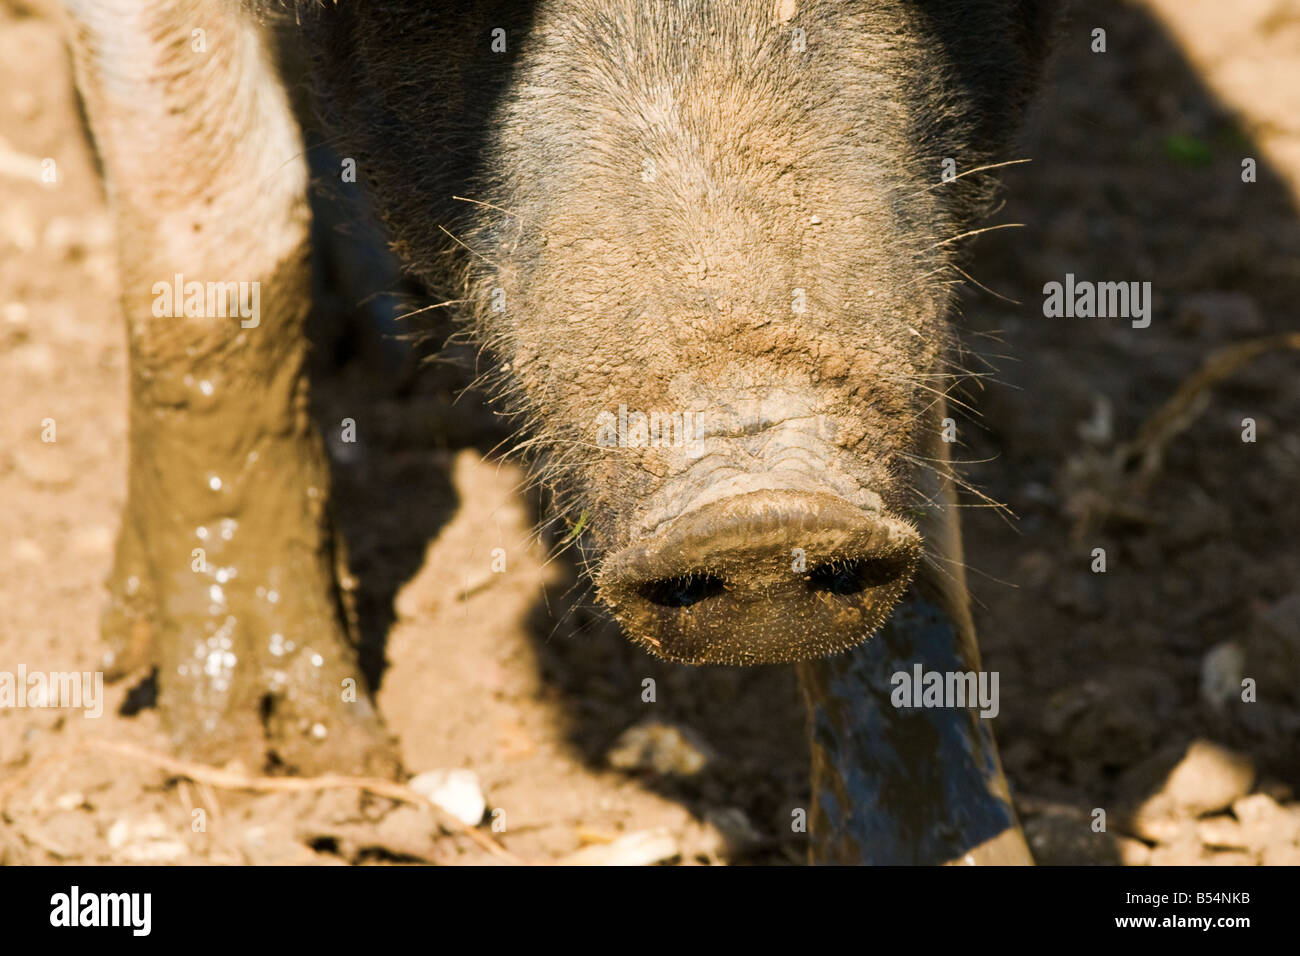 A close up colour photograph of a pot belly pig face/nose (003) Stock Photo